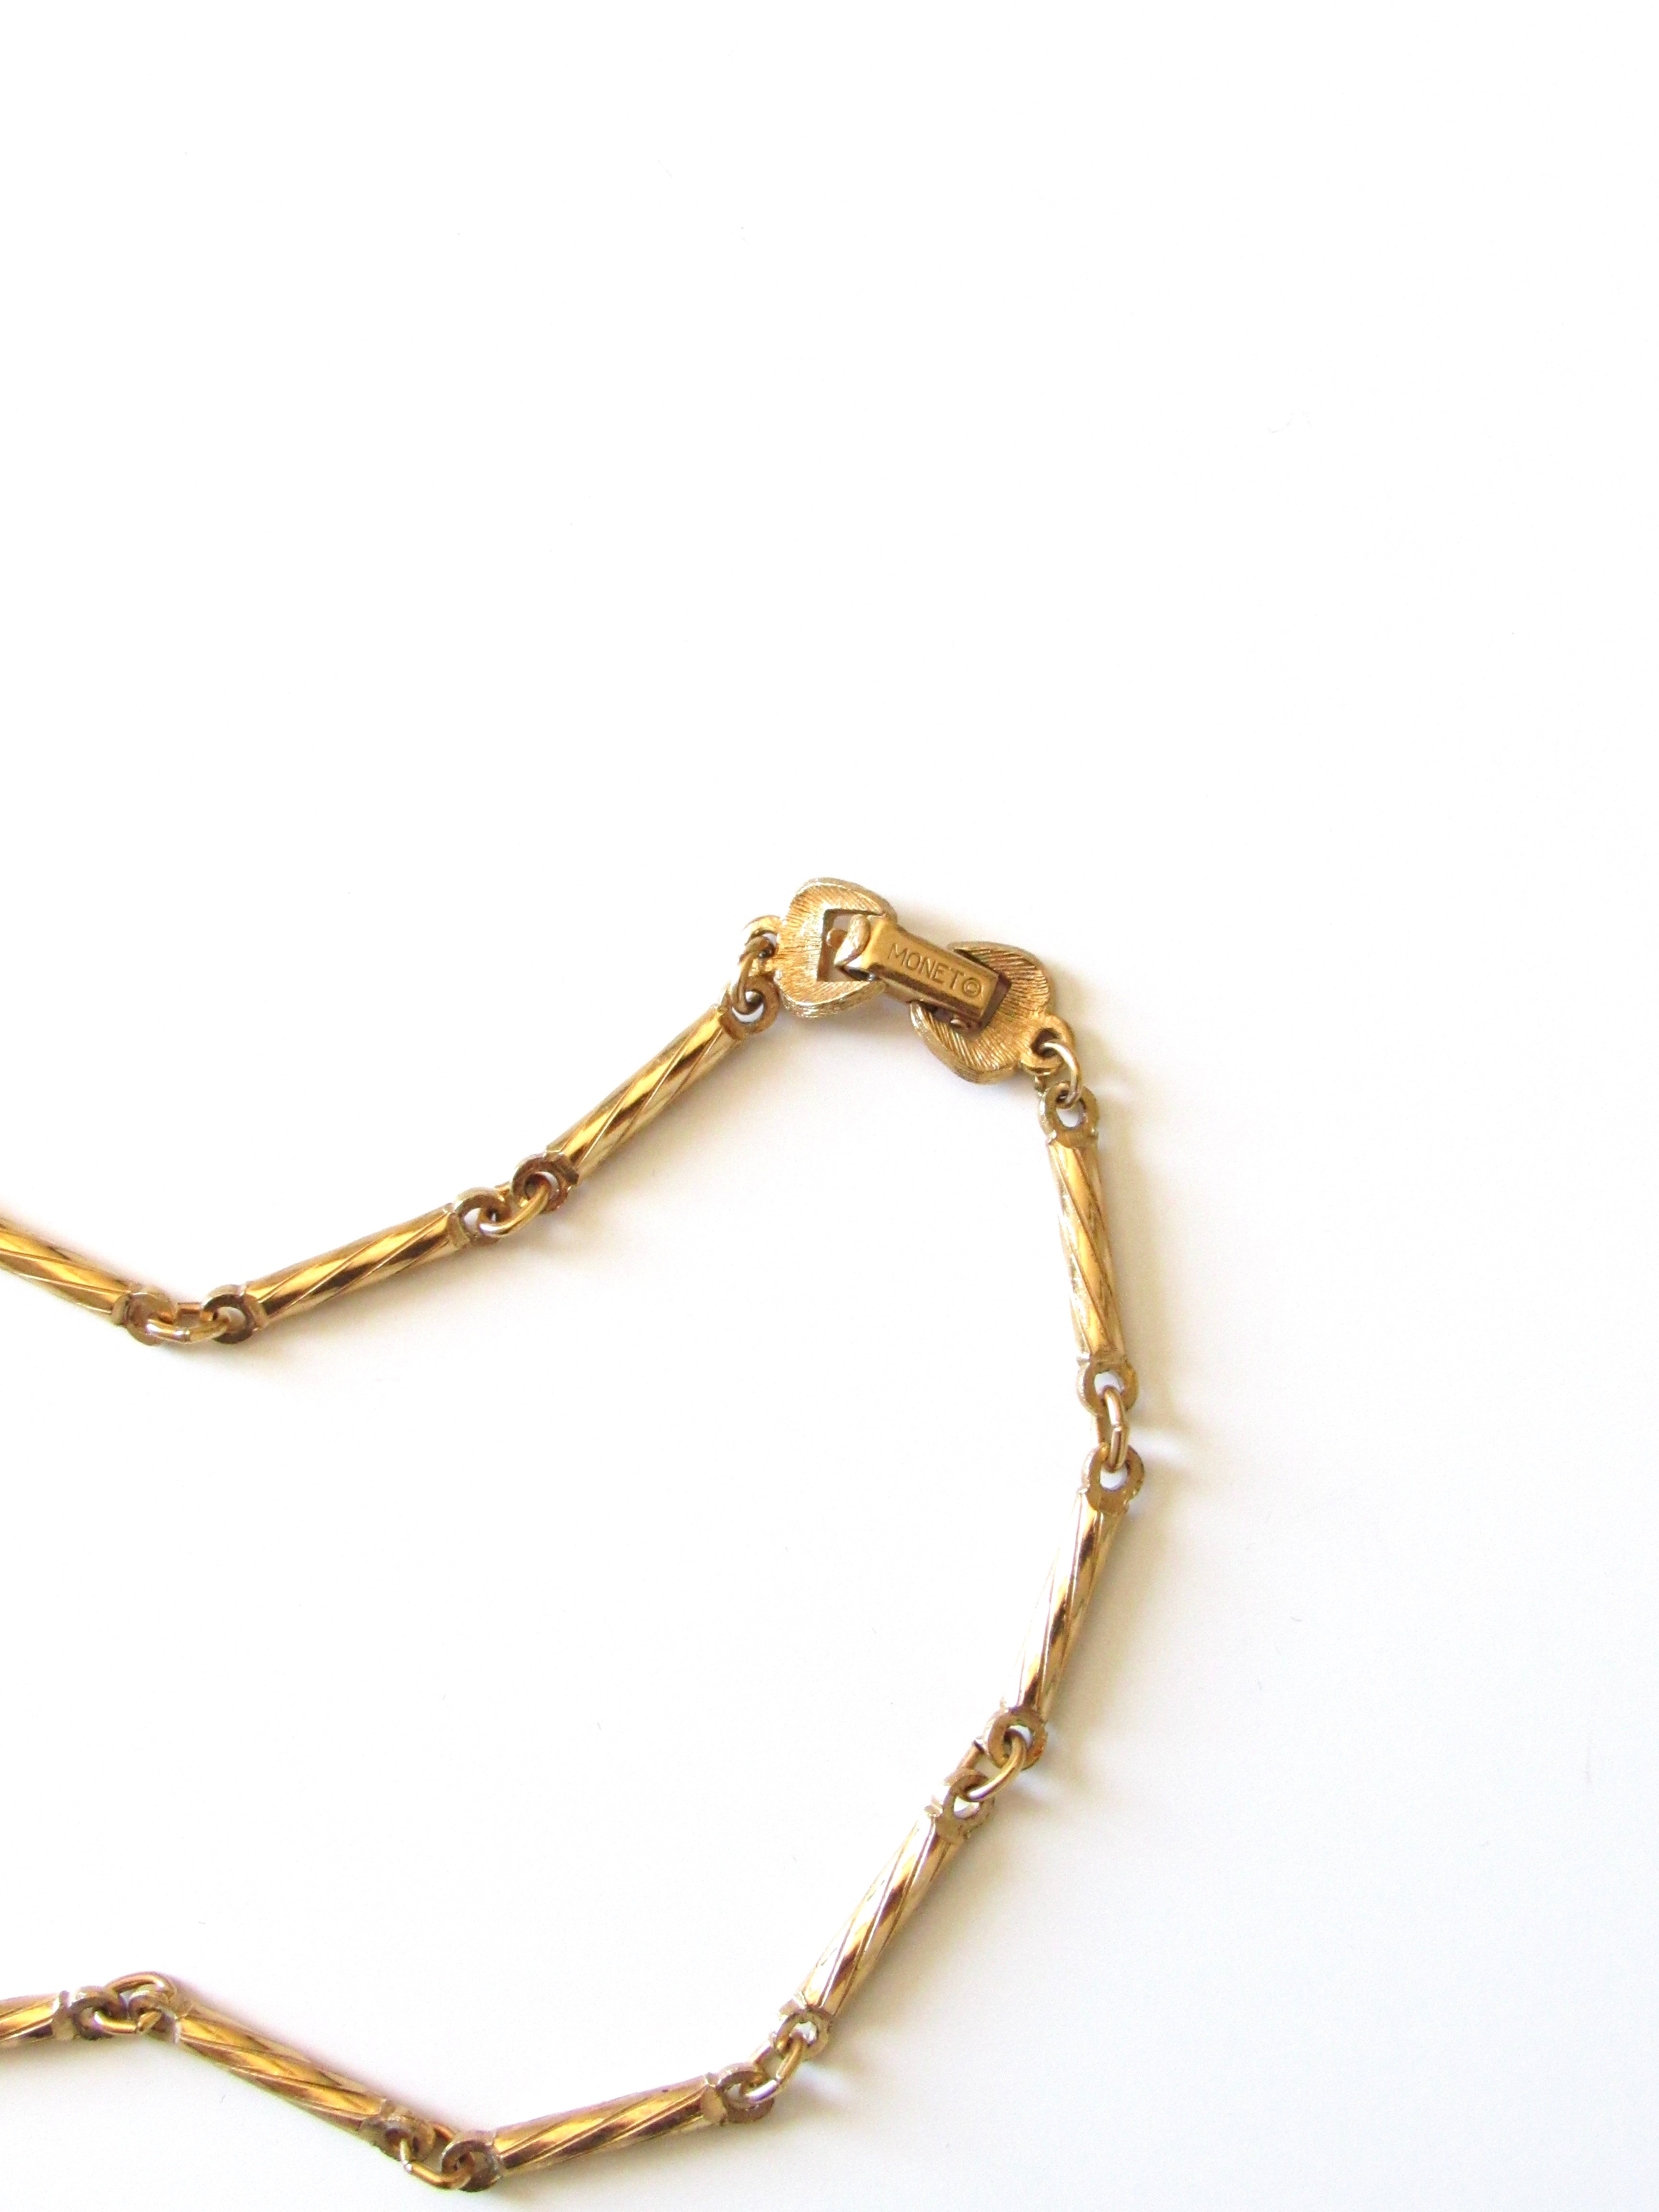 Vintage Monet Gold Statement Necklace